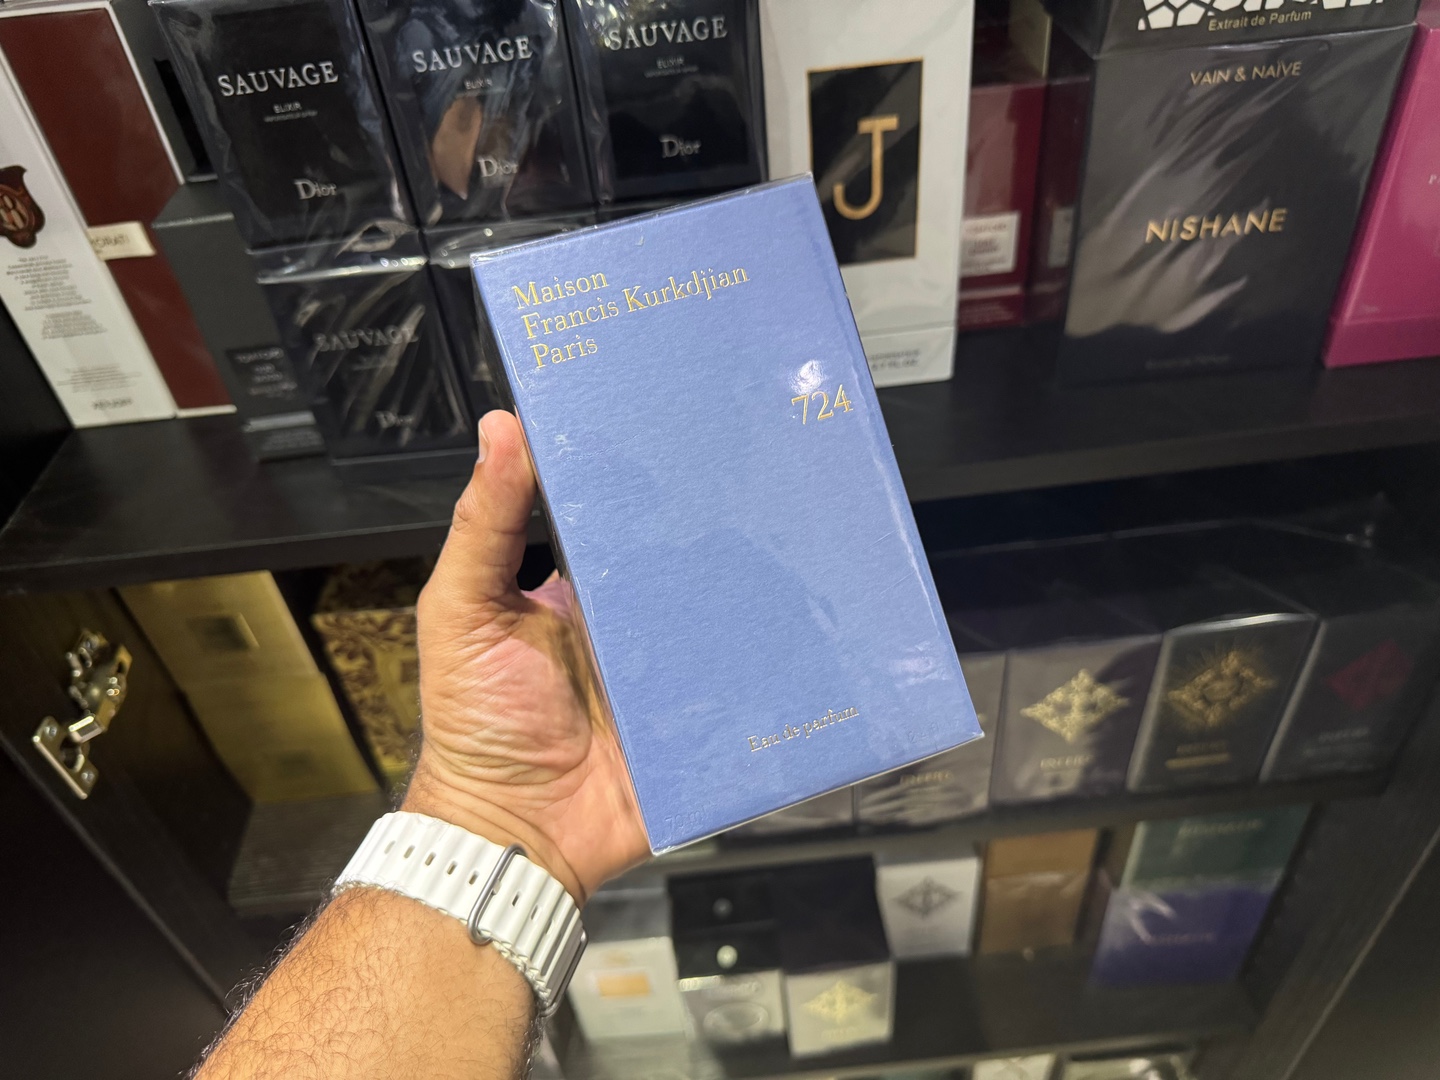 joyas, relojes y accesorios - Perfumes Maison Francis Kurkdjian Paris 724 Nuevos 70ml Originales $ 17,700 NEG 0